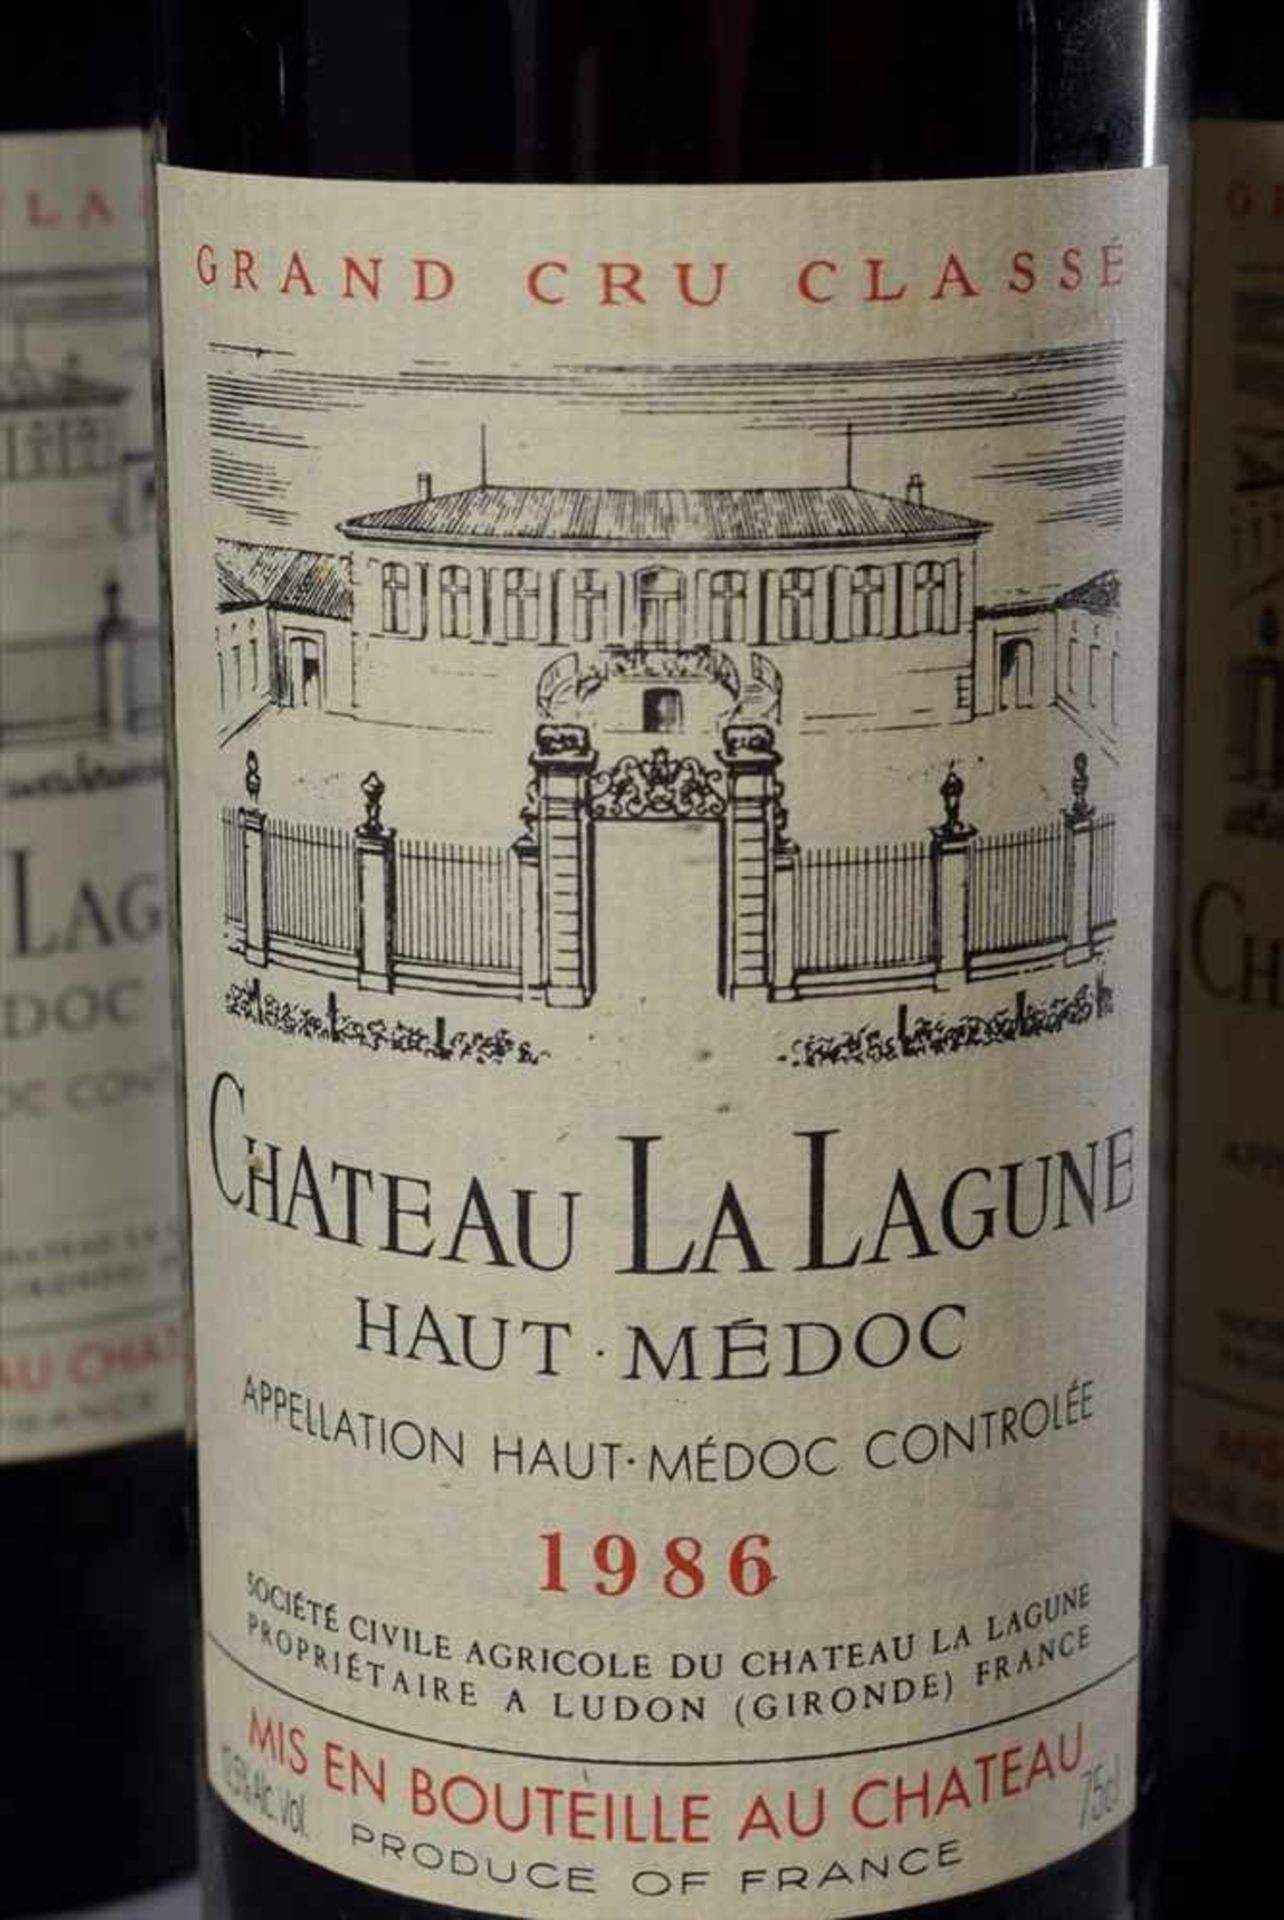 3 Flaschen Rotwein "Chateau La Lagune, Haut Medoc, Grand Cru Classé", 1986, Schlossabfüllung, - Image 2 of 4